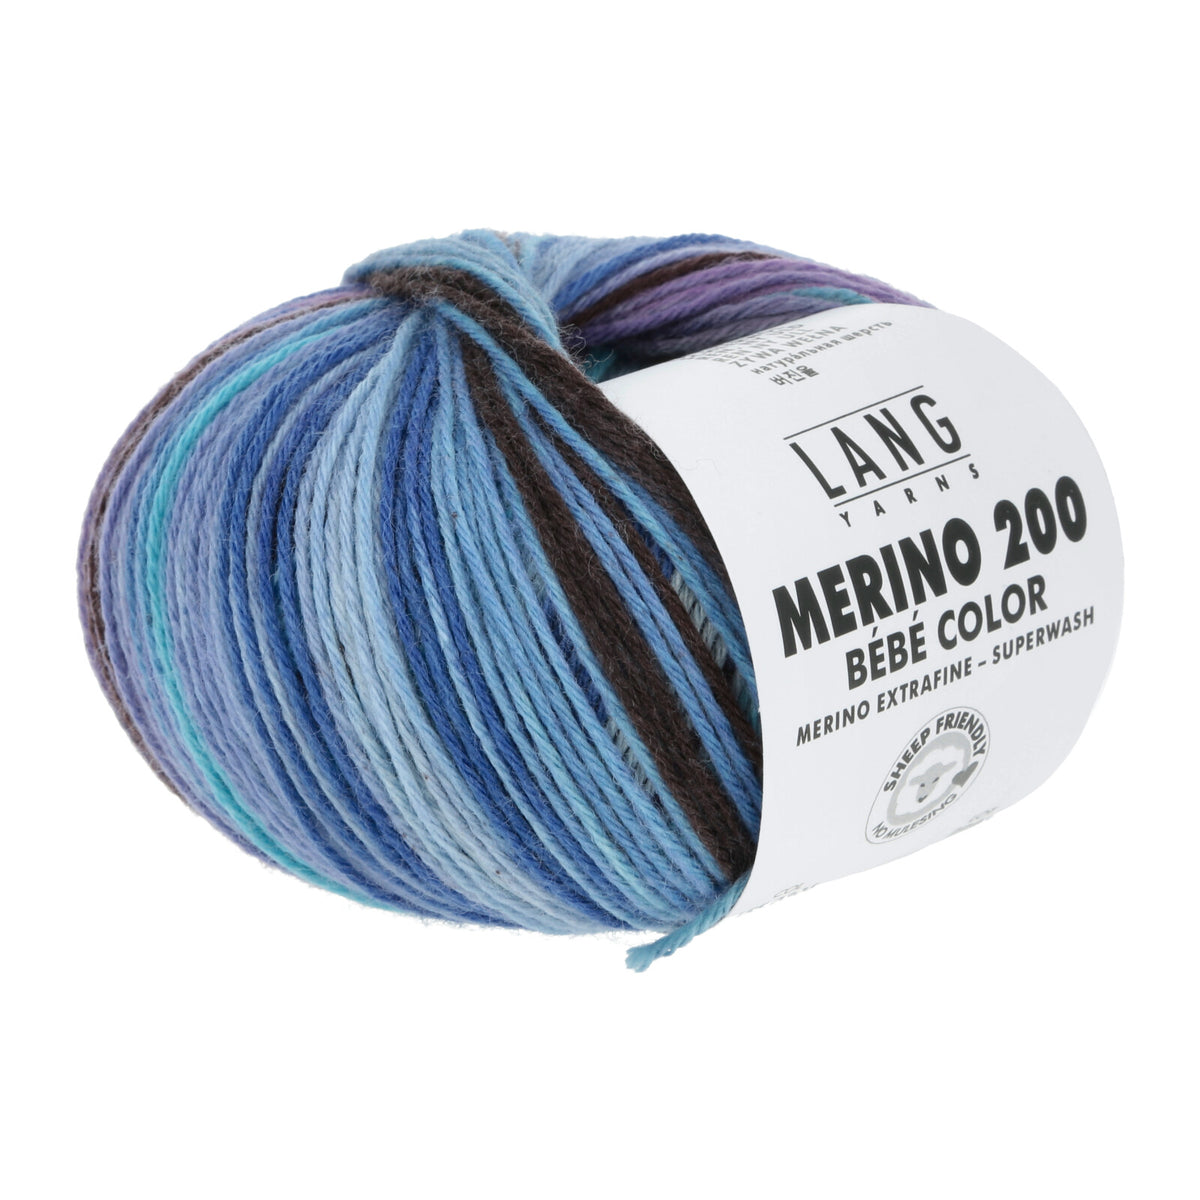 Lang Merino 200 Bebe Color